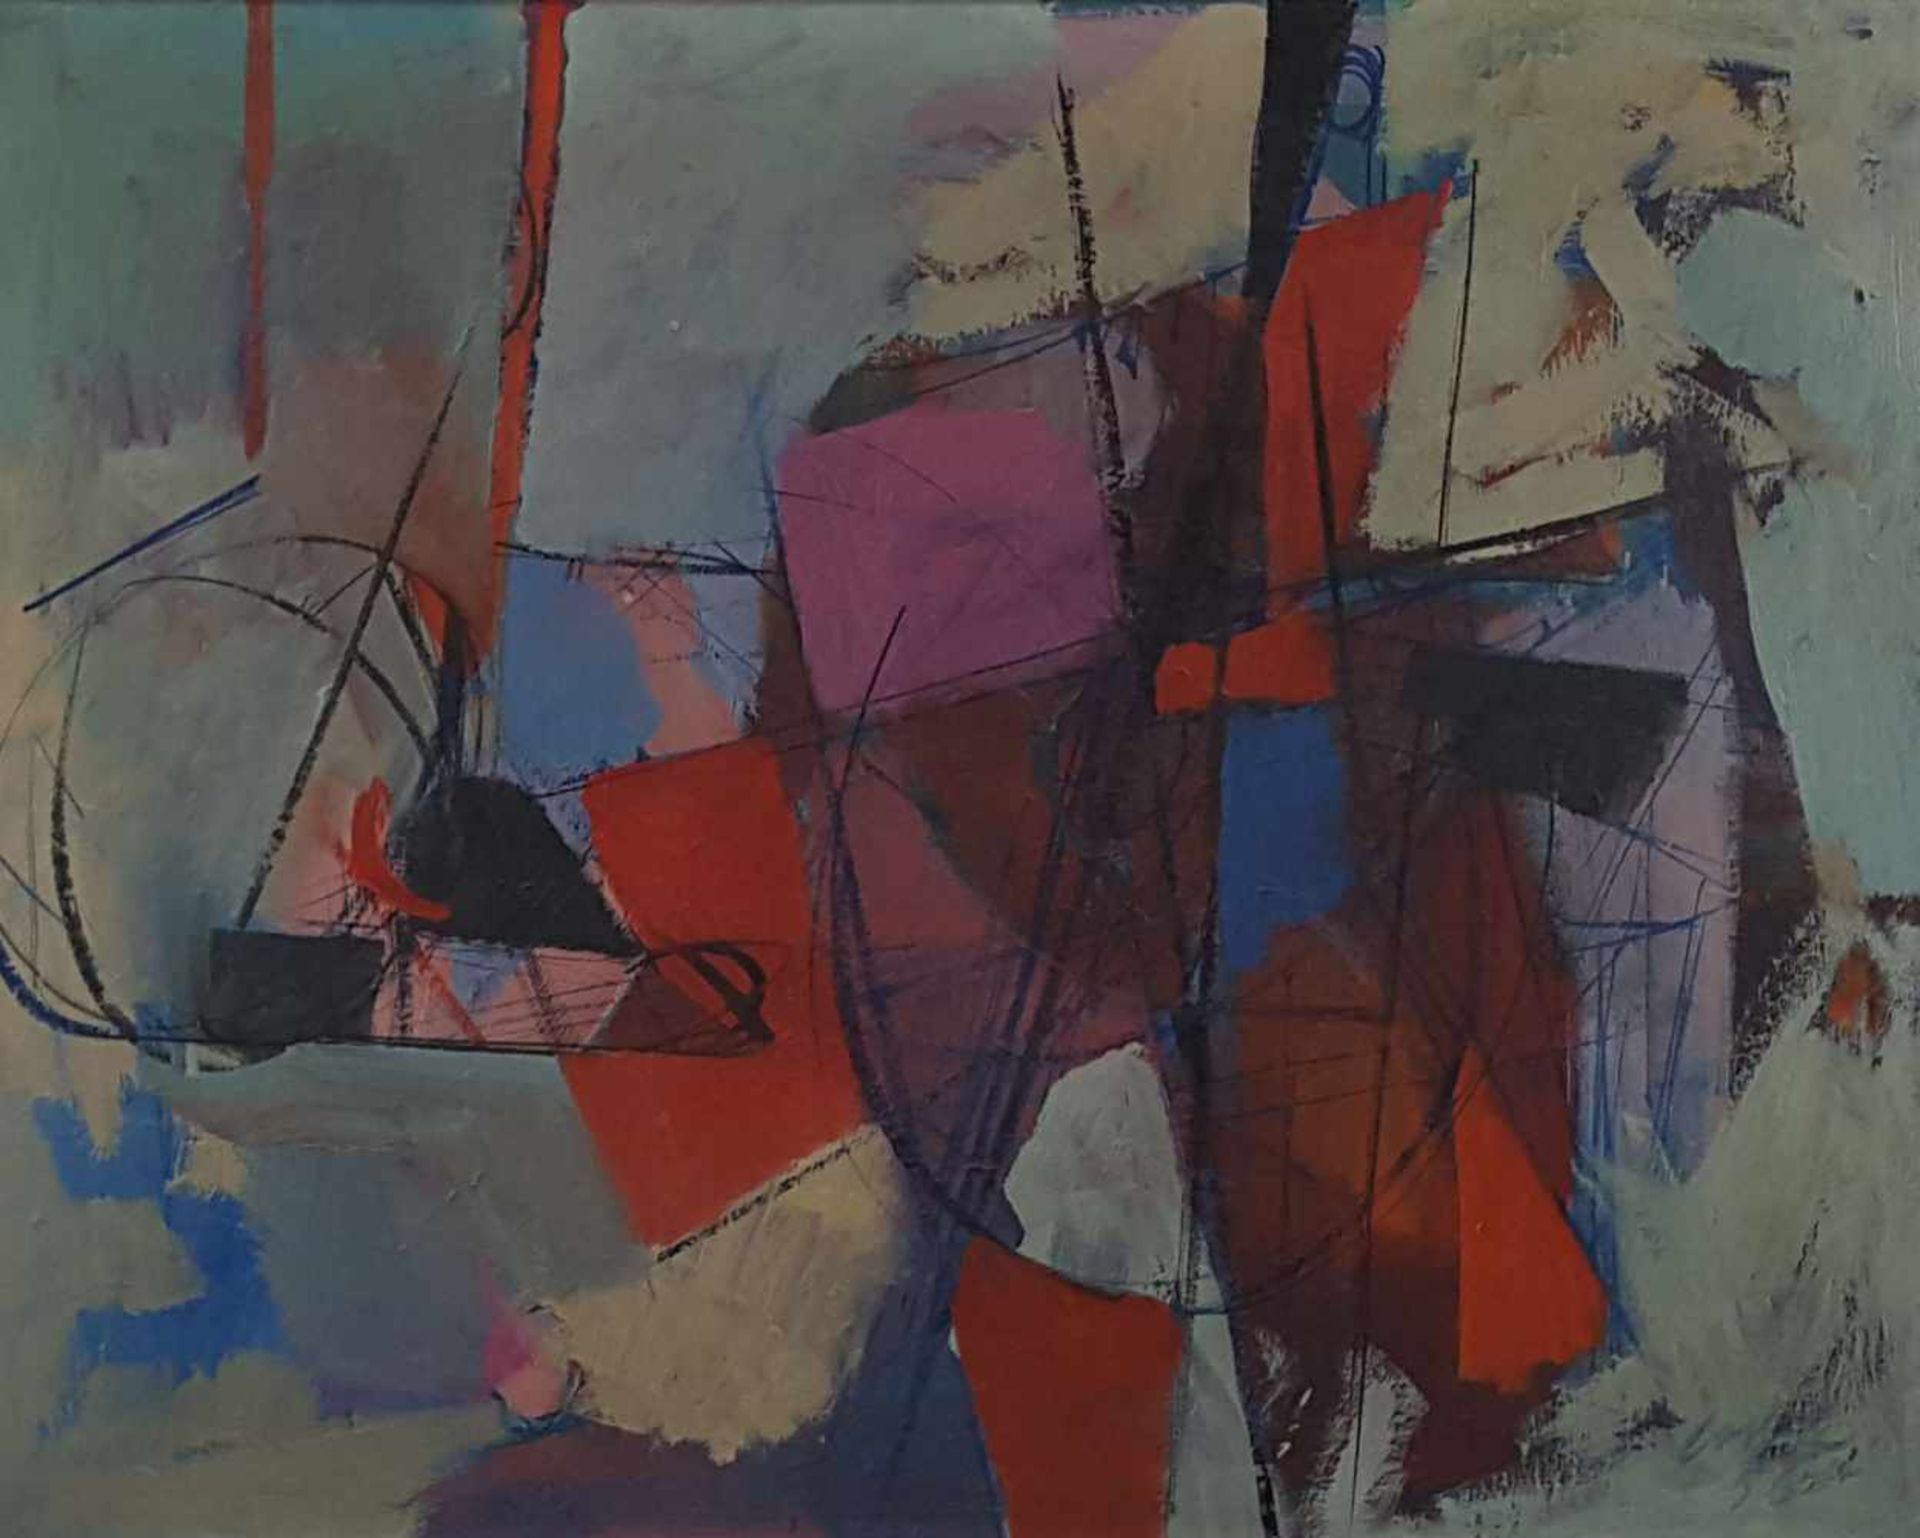 Paul CONZELMANN (1898 - 1977). Abstract composition, 1956.